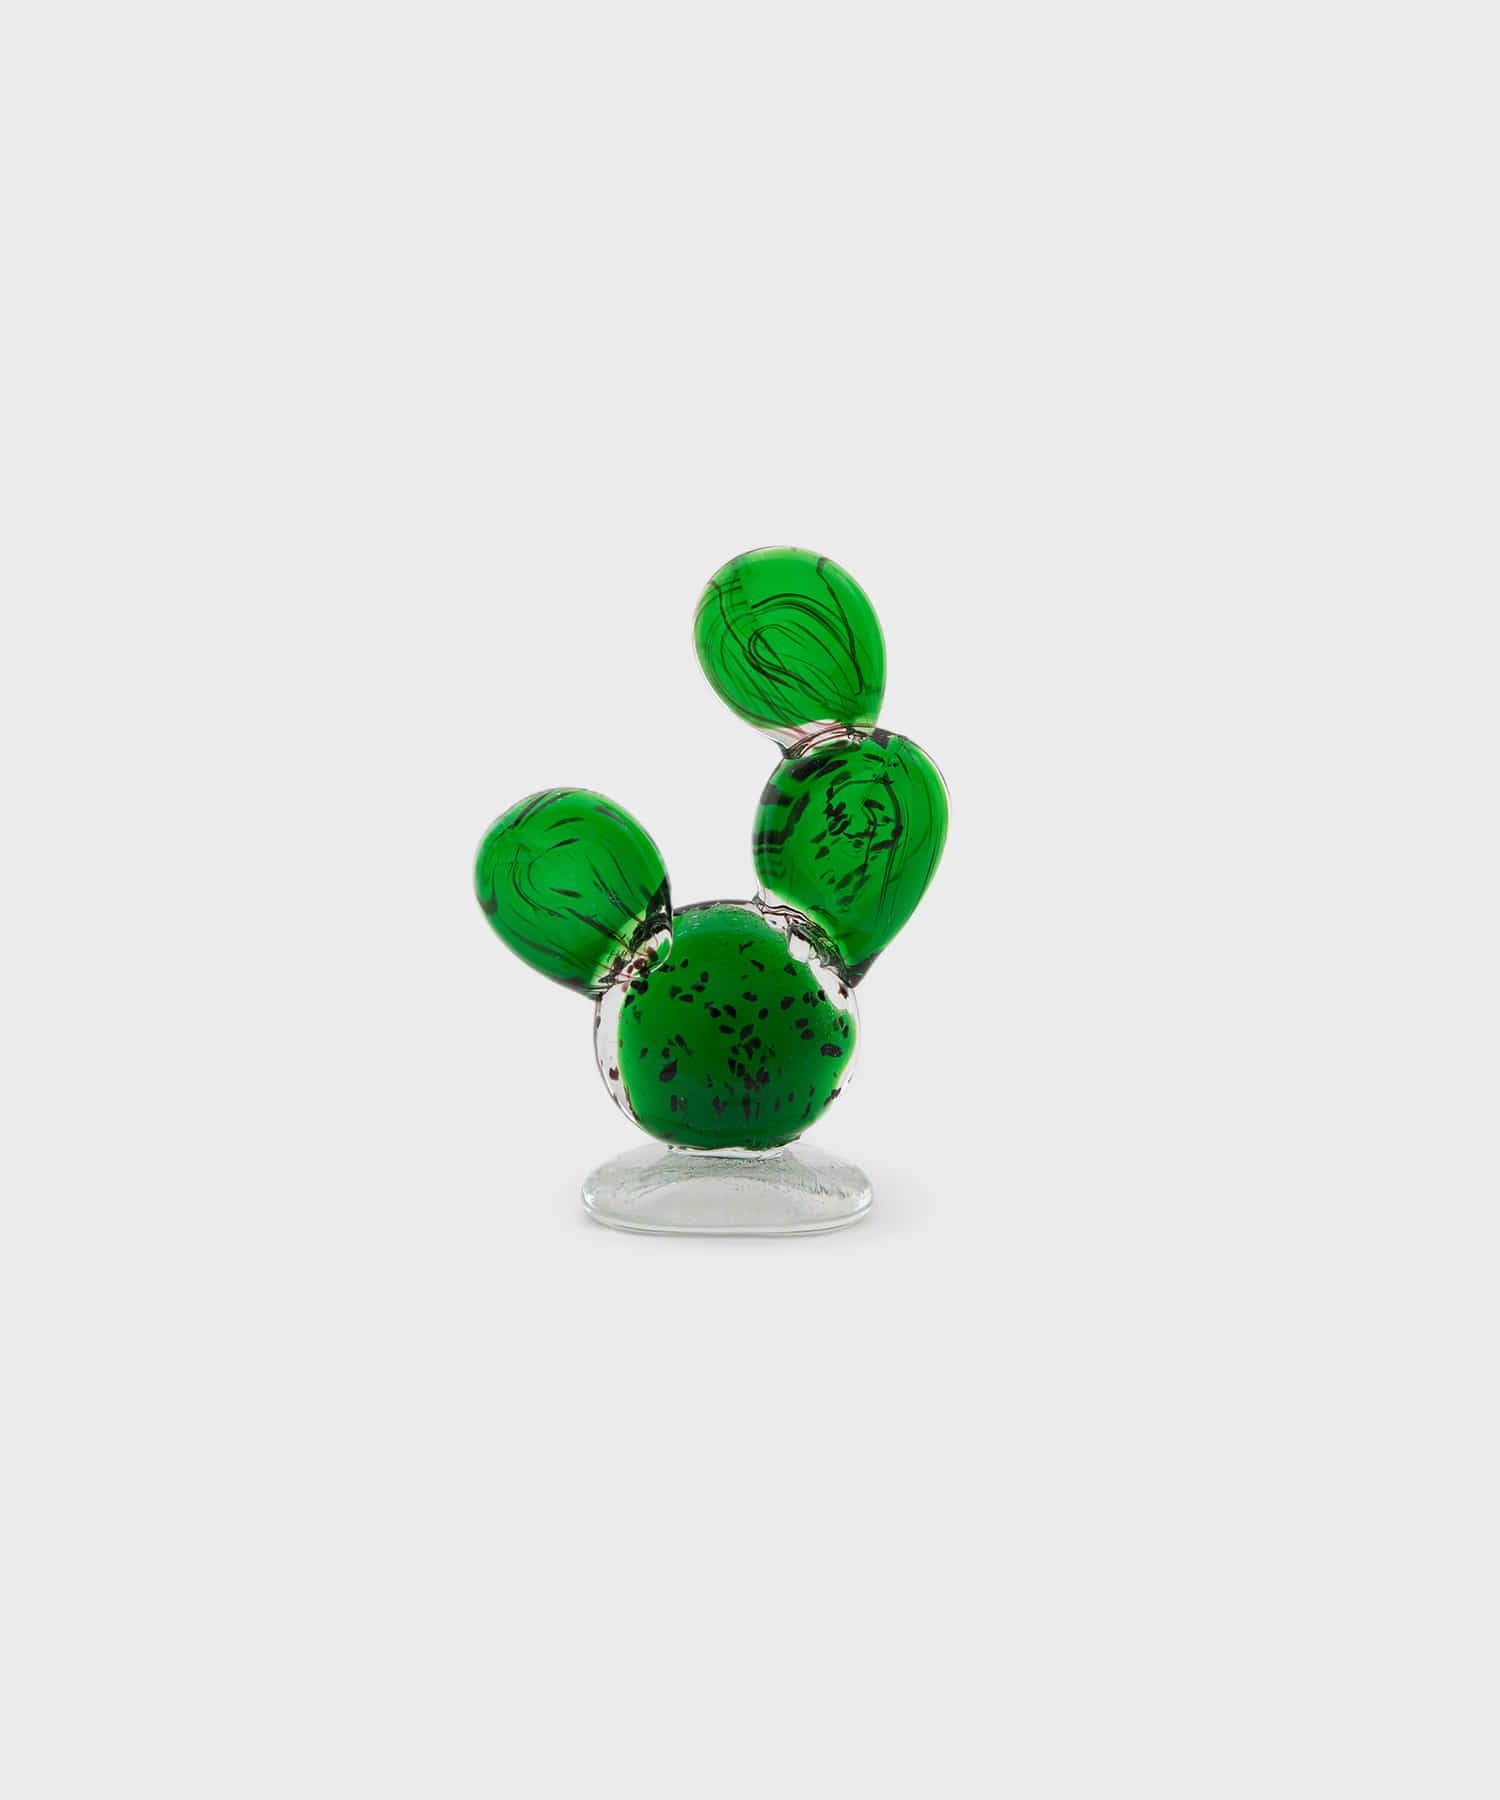 Cactus Glass Ornament (Round Fan S)